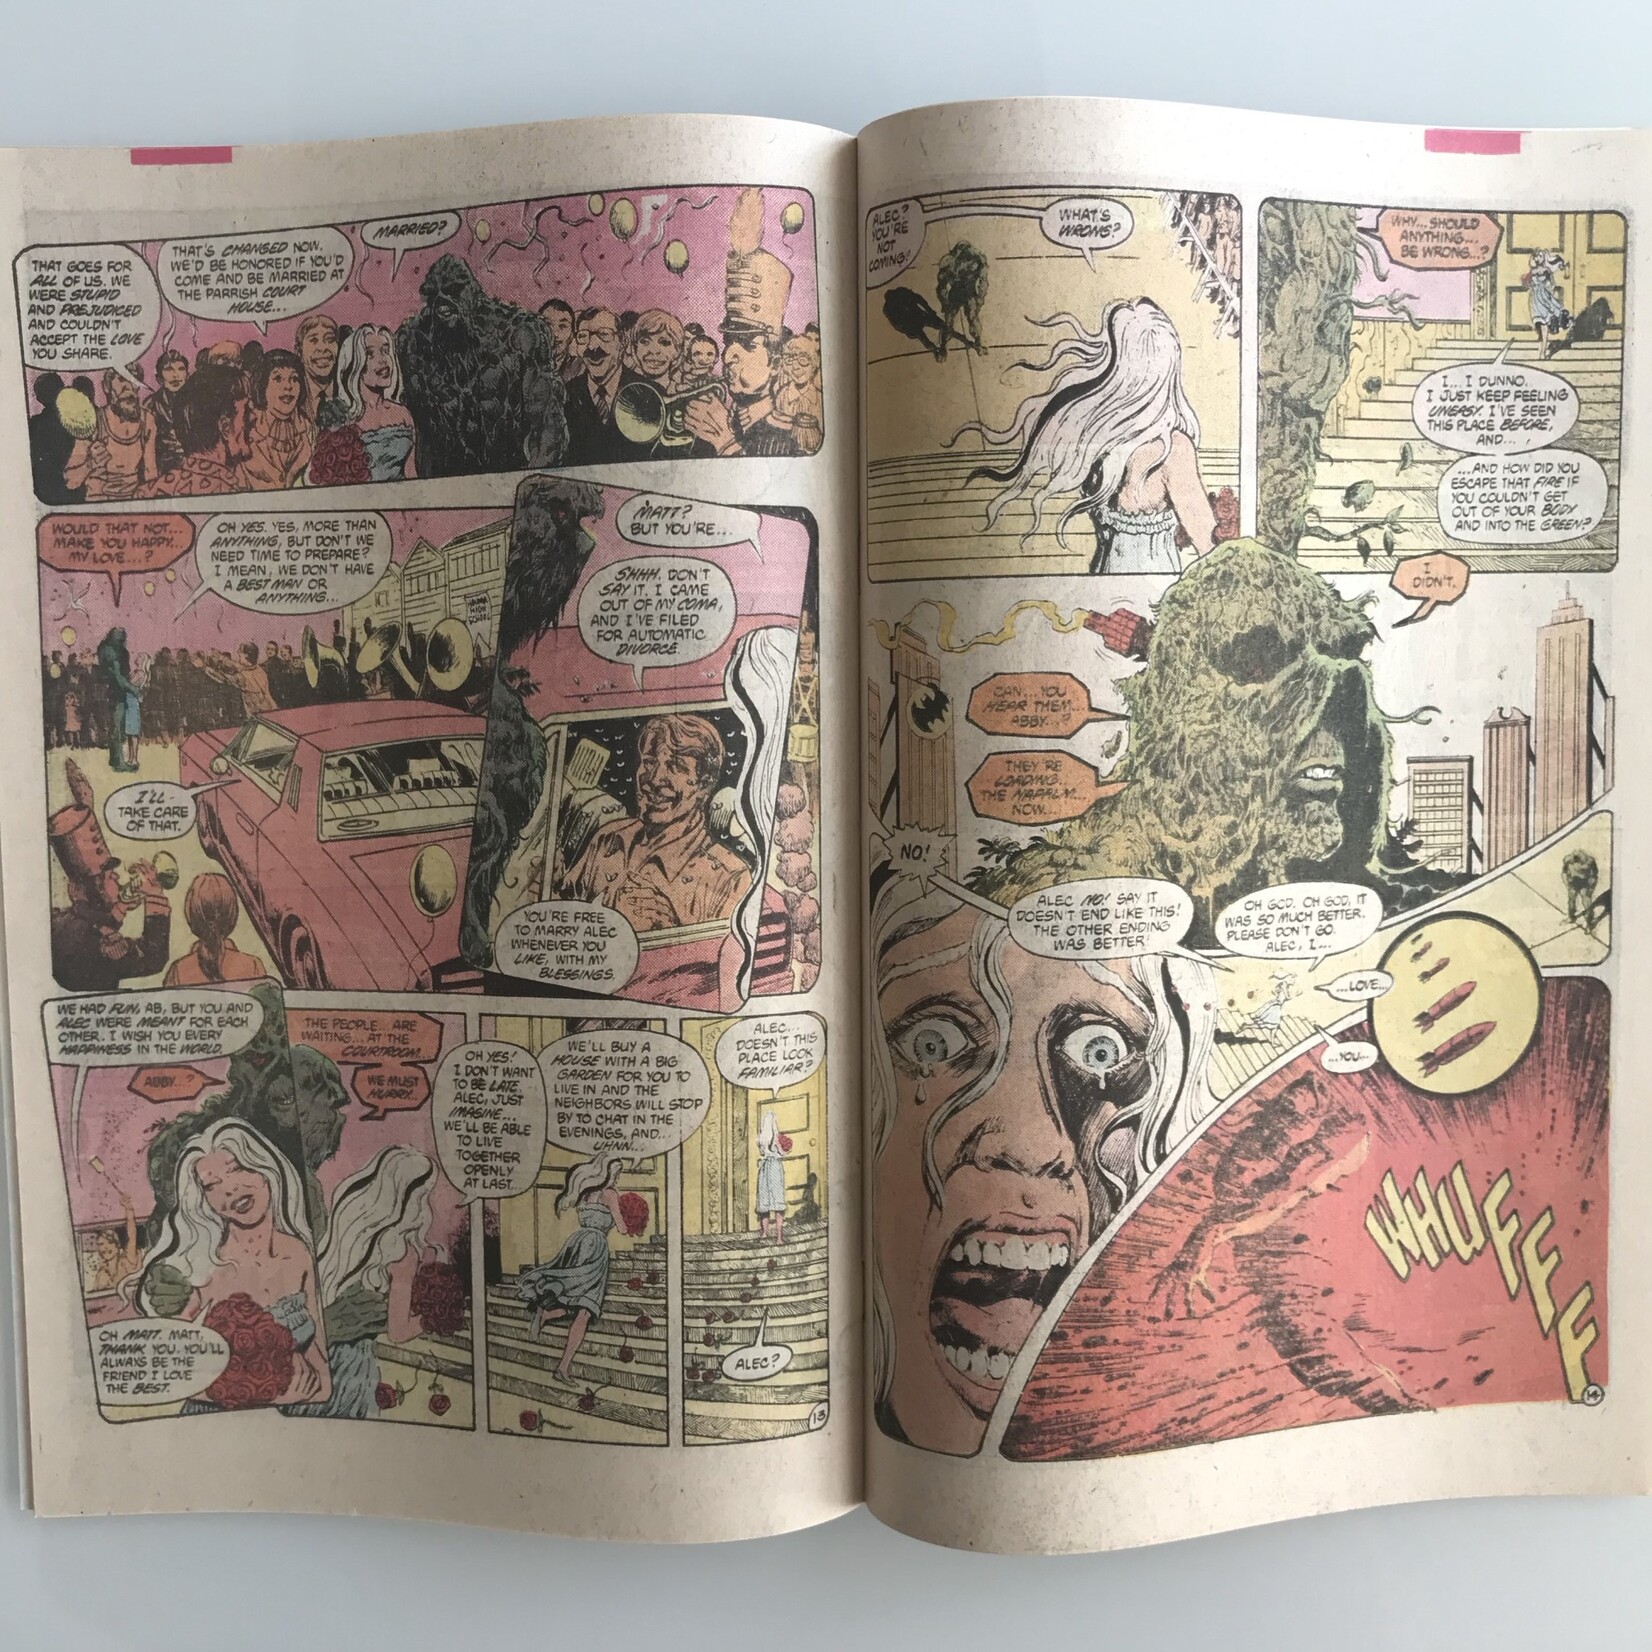 Swamp Thing - Vol. 2 #55 December 1986 - Comic Book (VG)